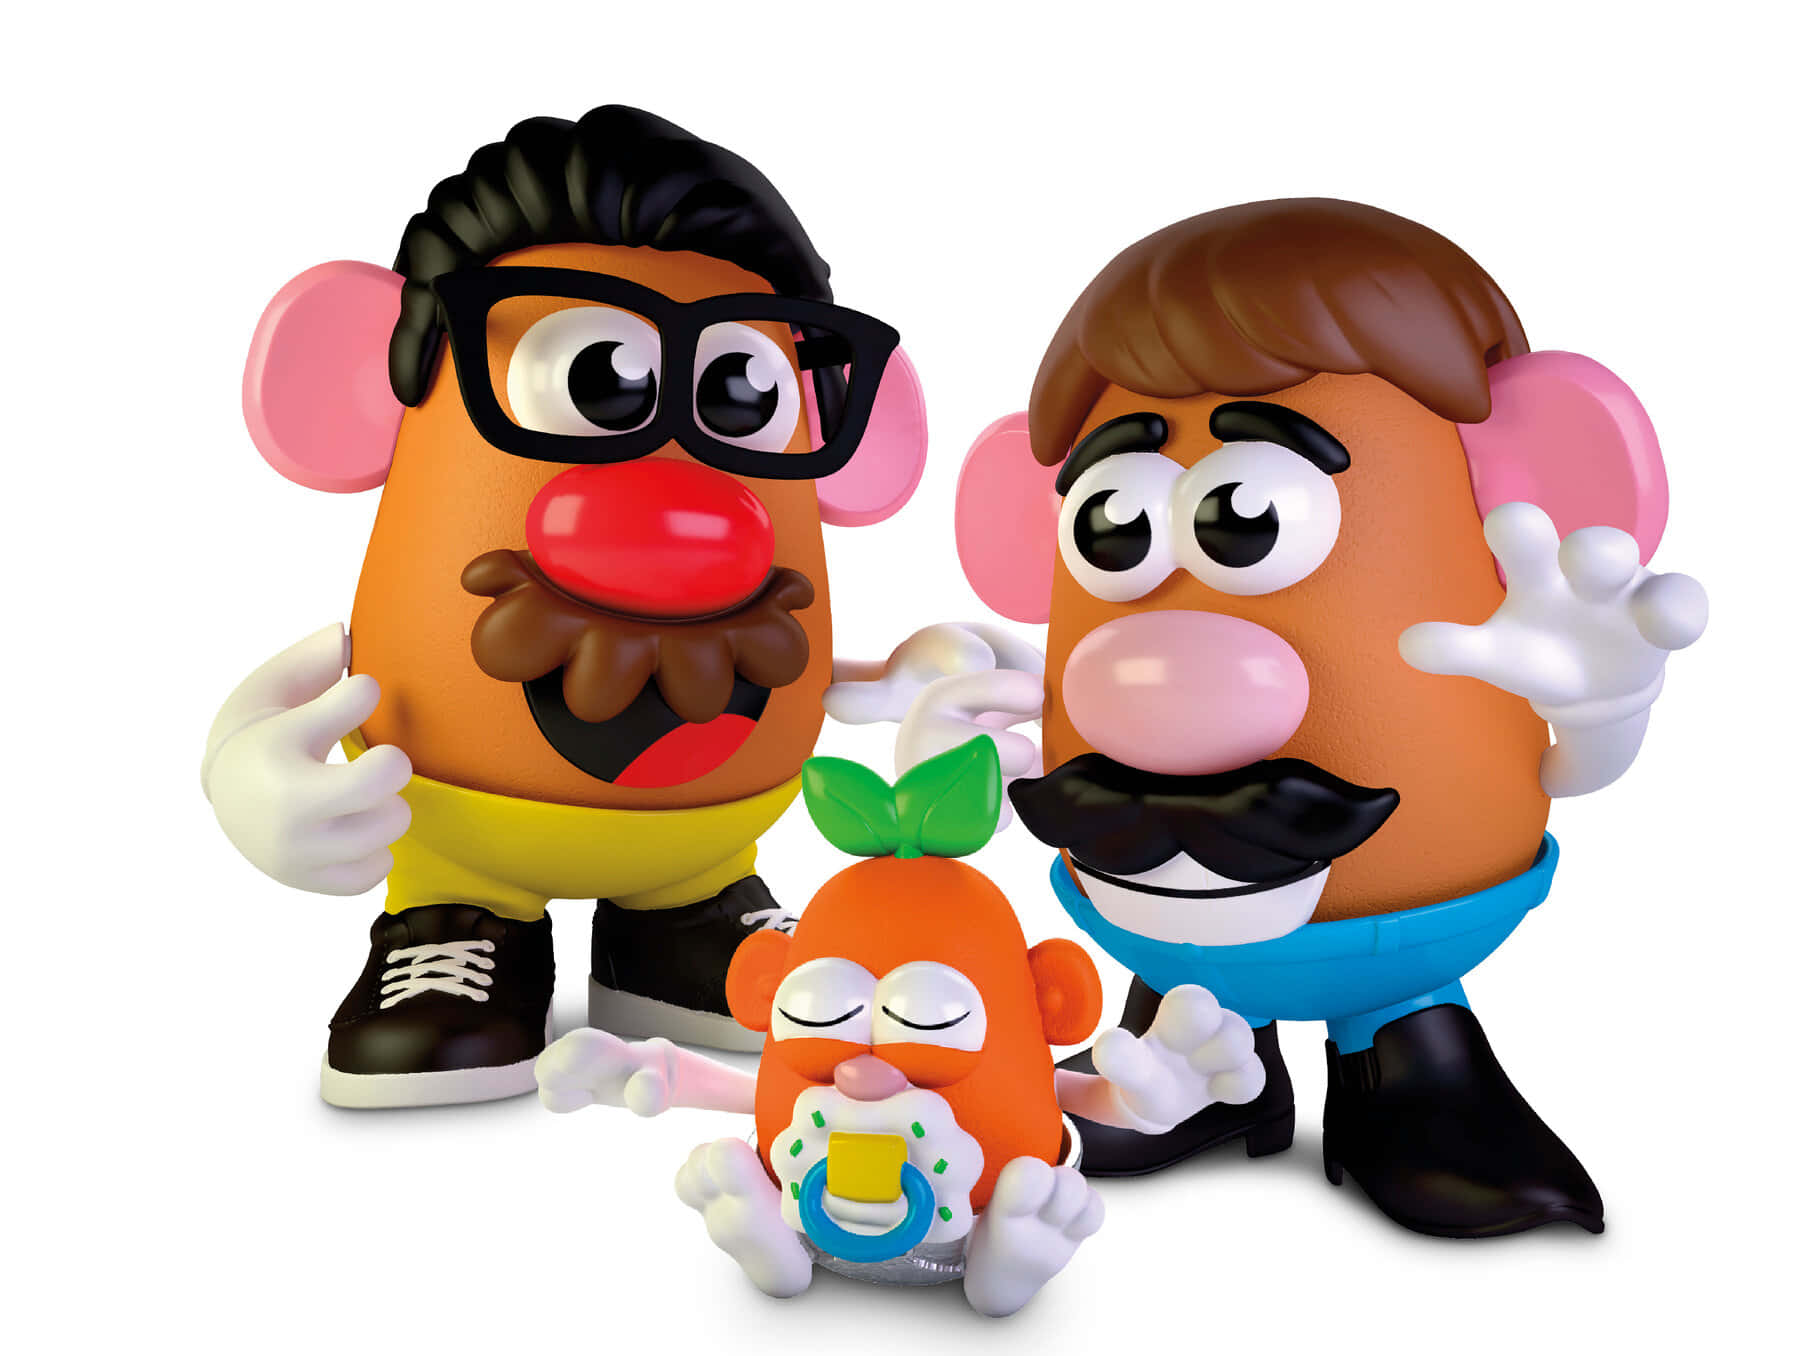 Mrpotato Head, Mr Potato Head, Mr Potato Head, Mr Potato Head, Mr Potato Head, Mr Potato Head, Mr Potato Head.